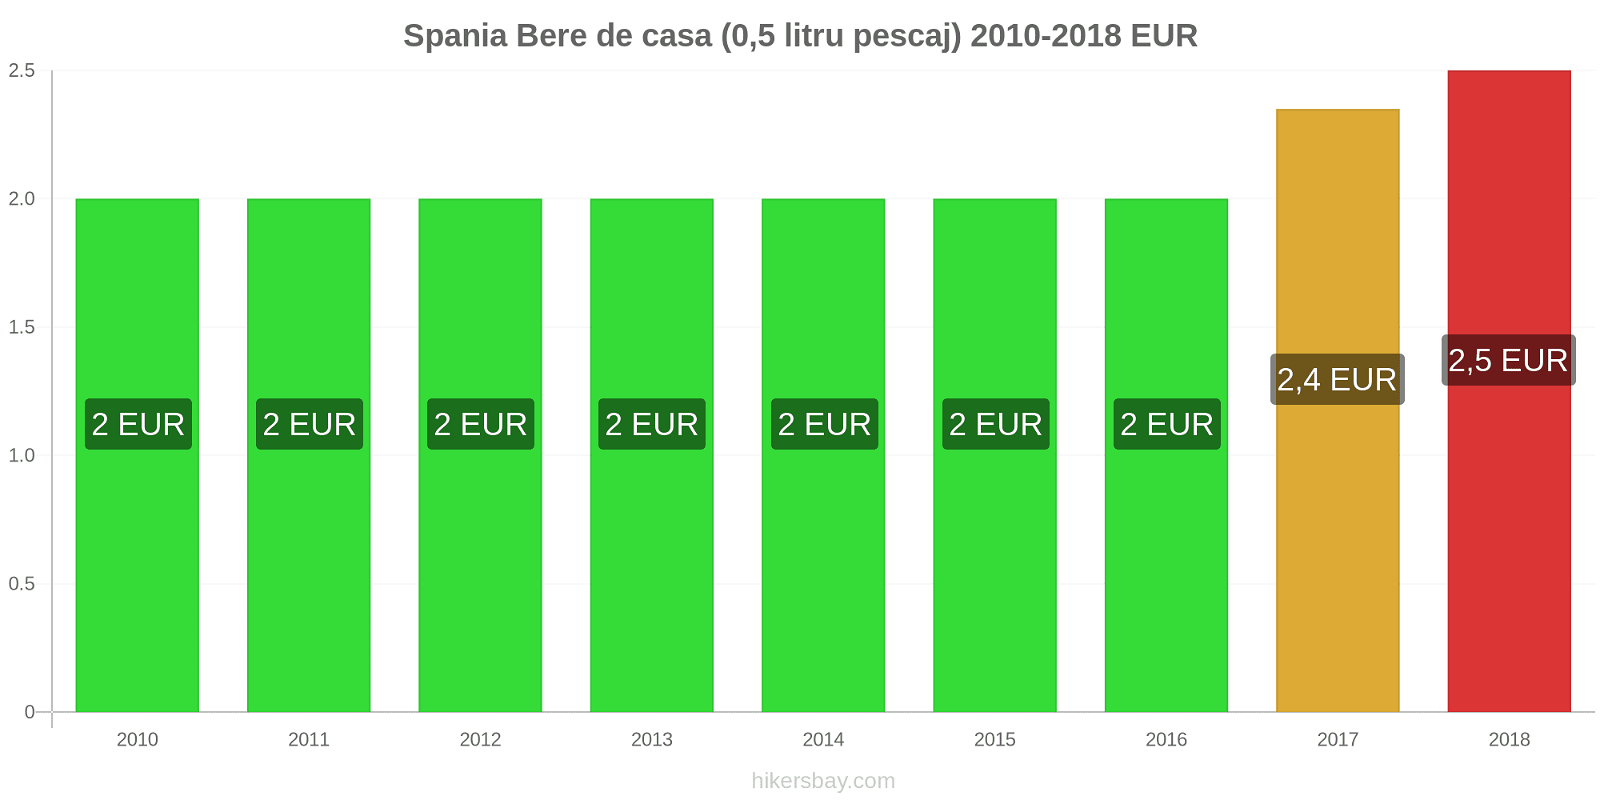 Spania schimbări de prețuri Bere la halbă (0,5 litri) hikersbay.com